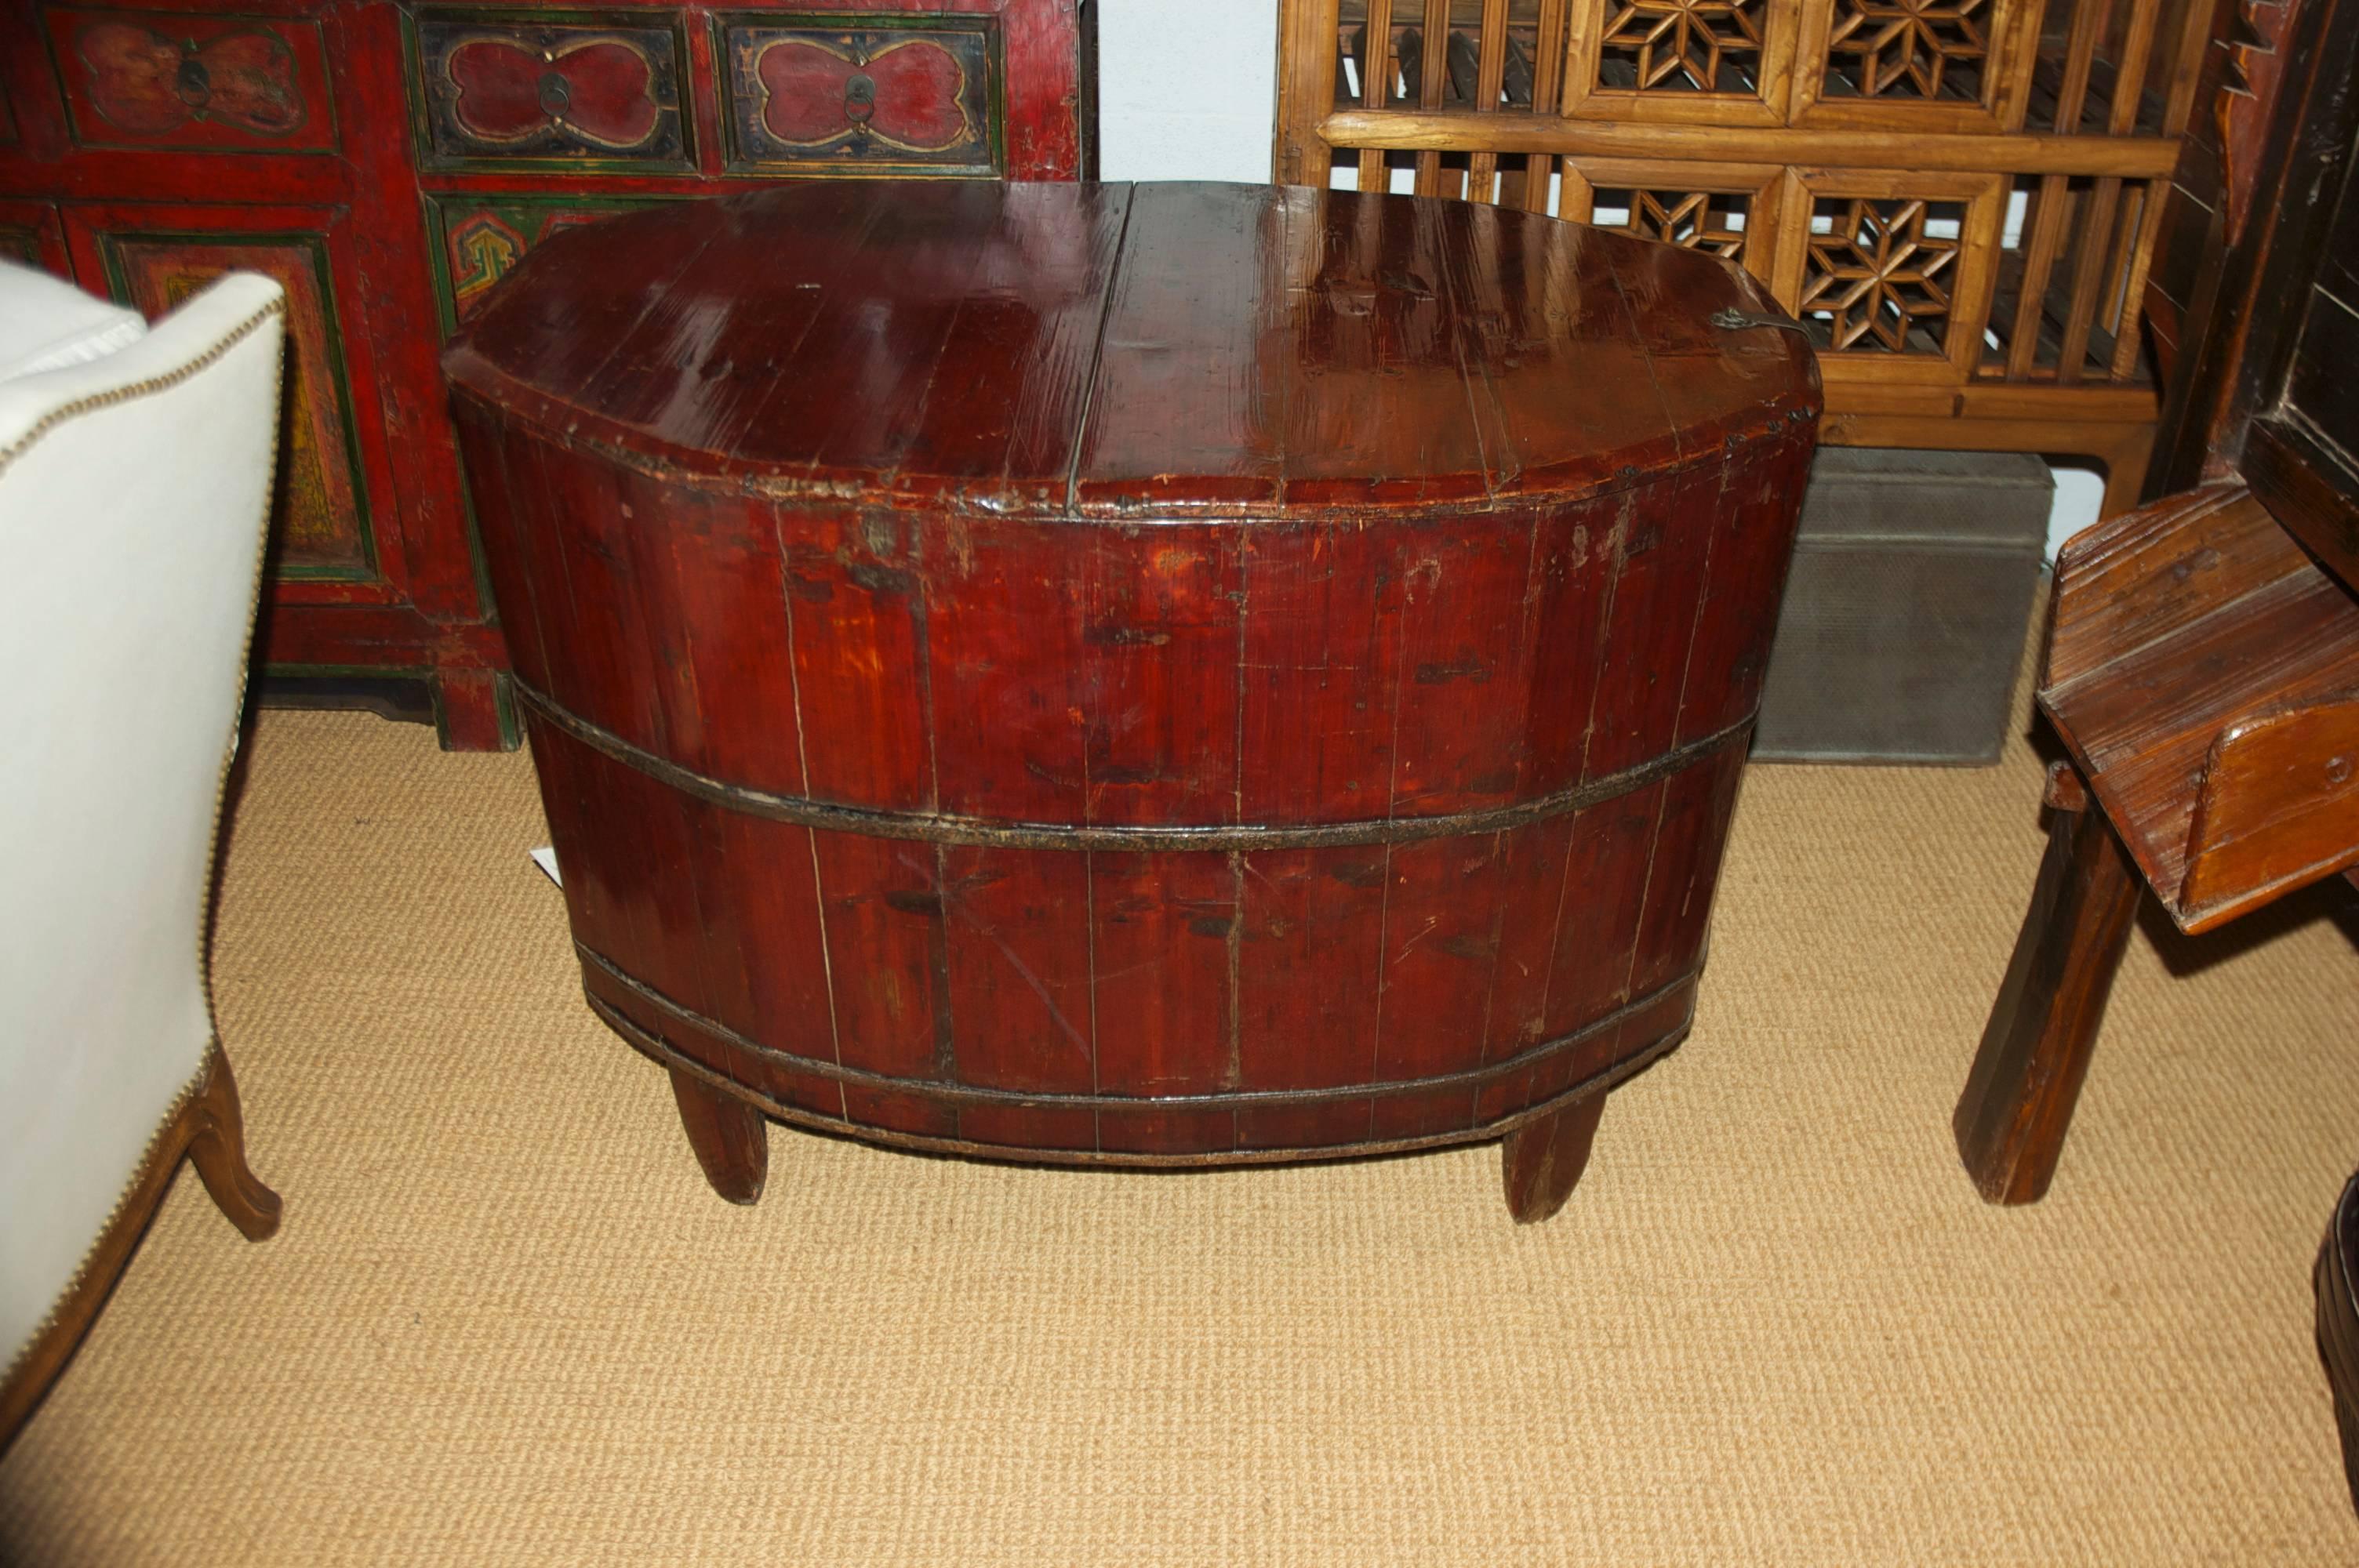 antique grain bin for sale